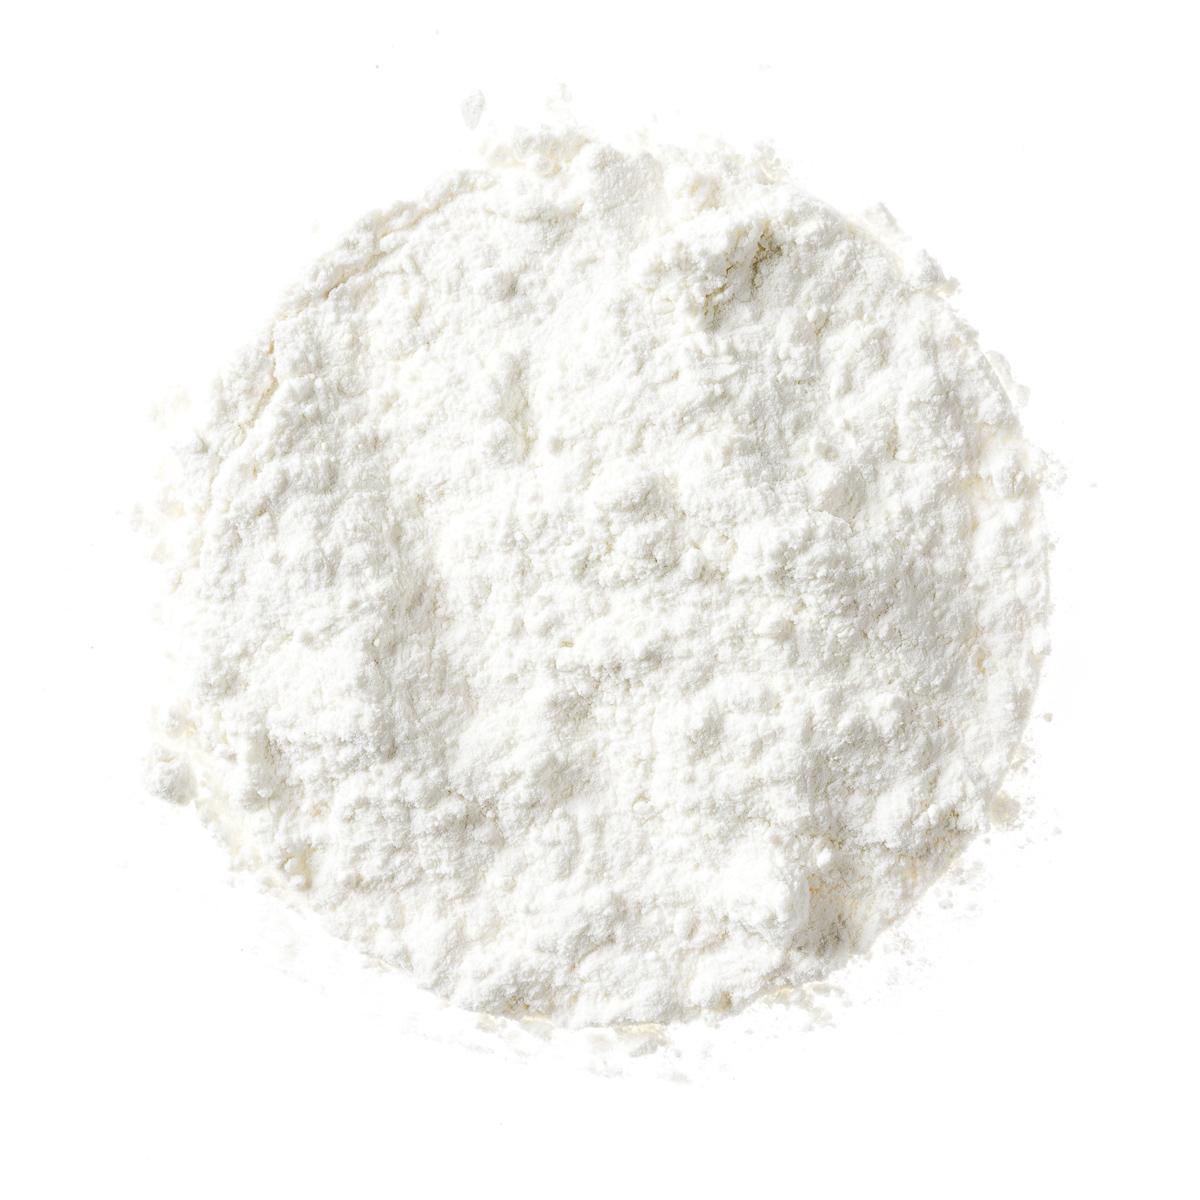 File:Bulk cheese powder at winco (5115880112).jpg - Wikimedia Commons